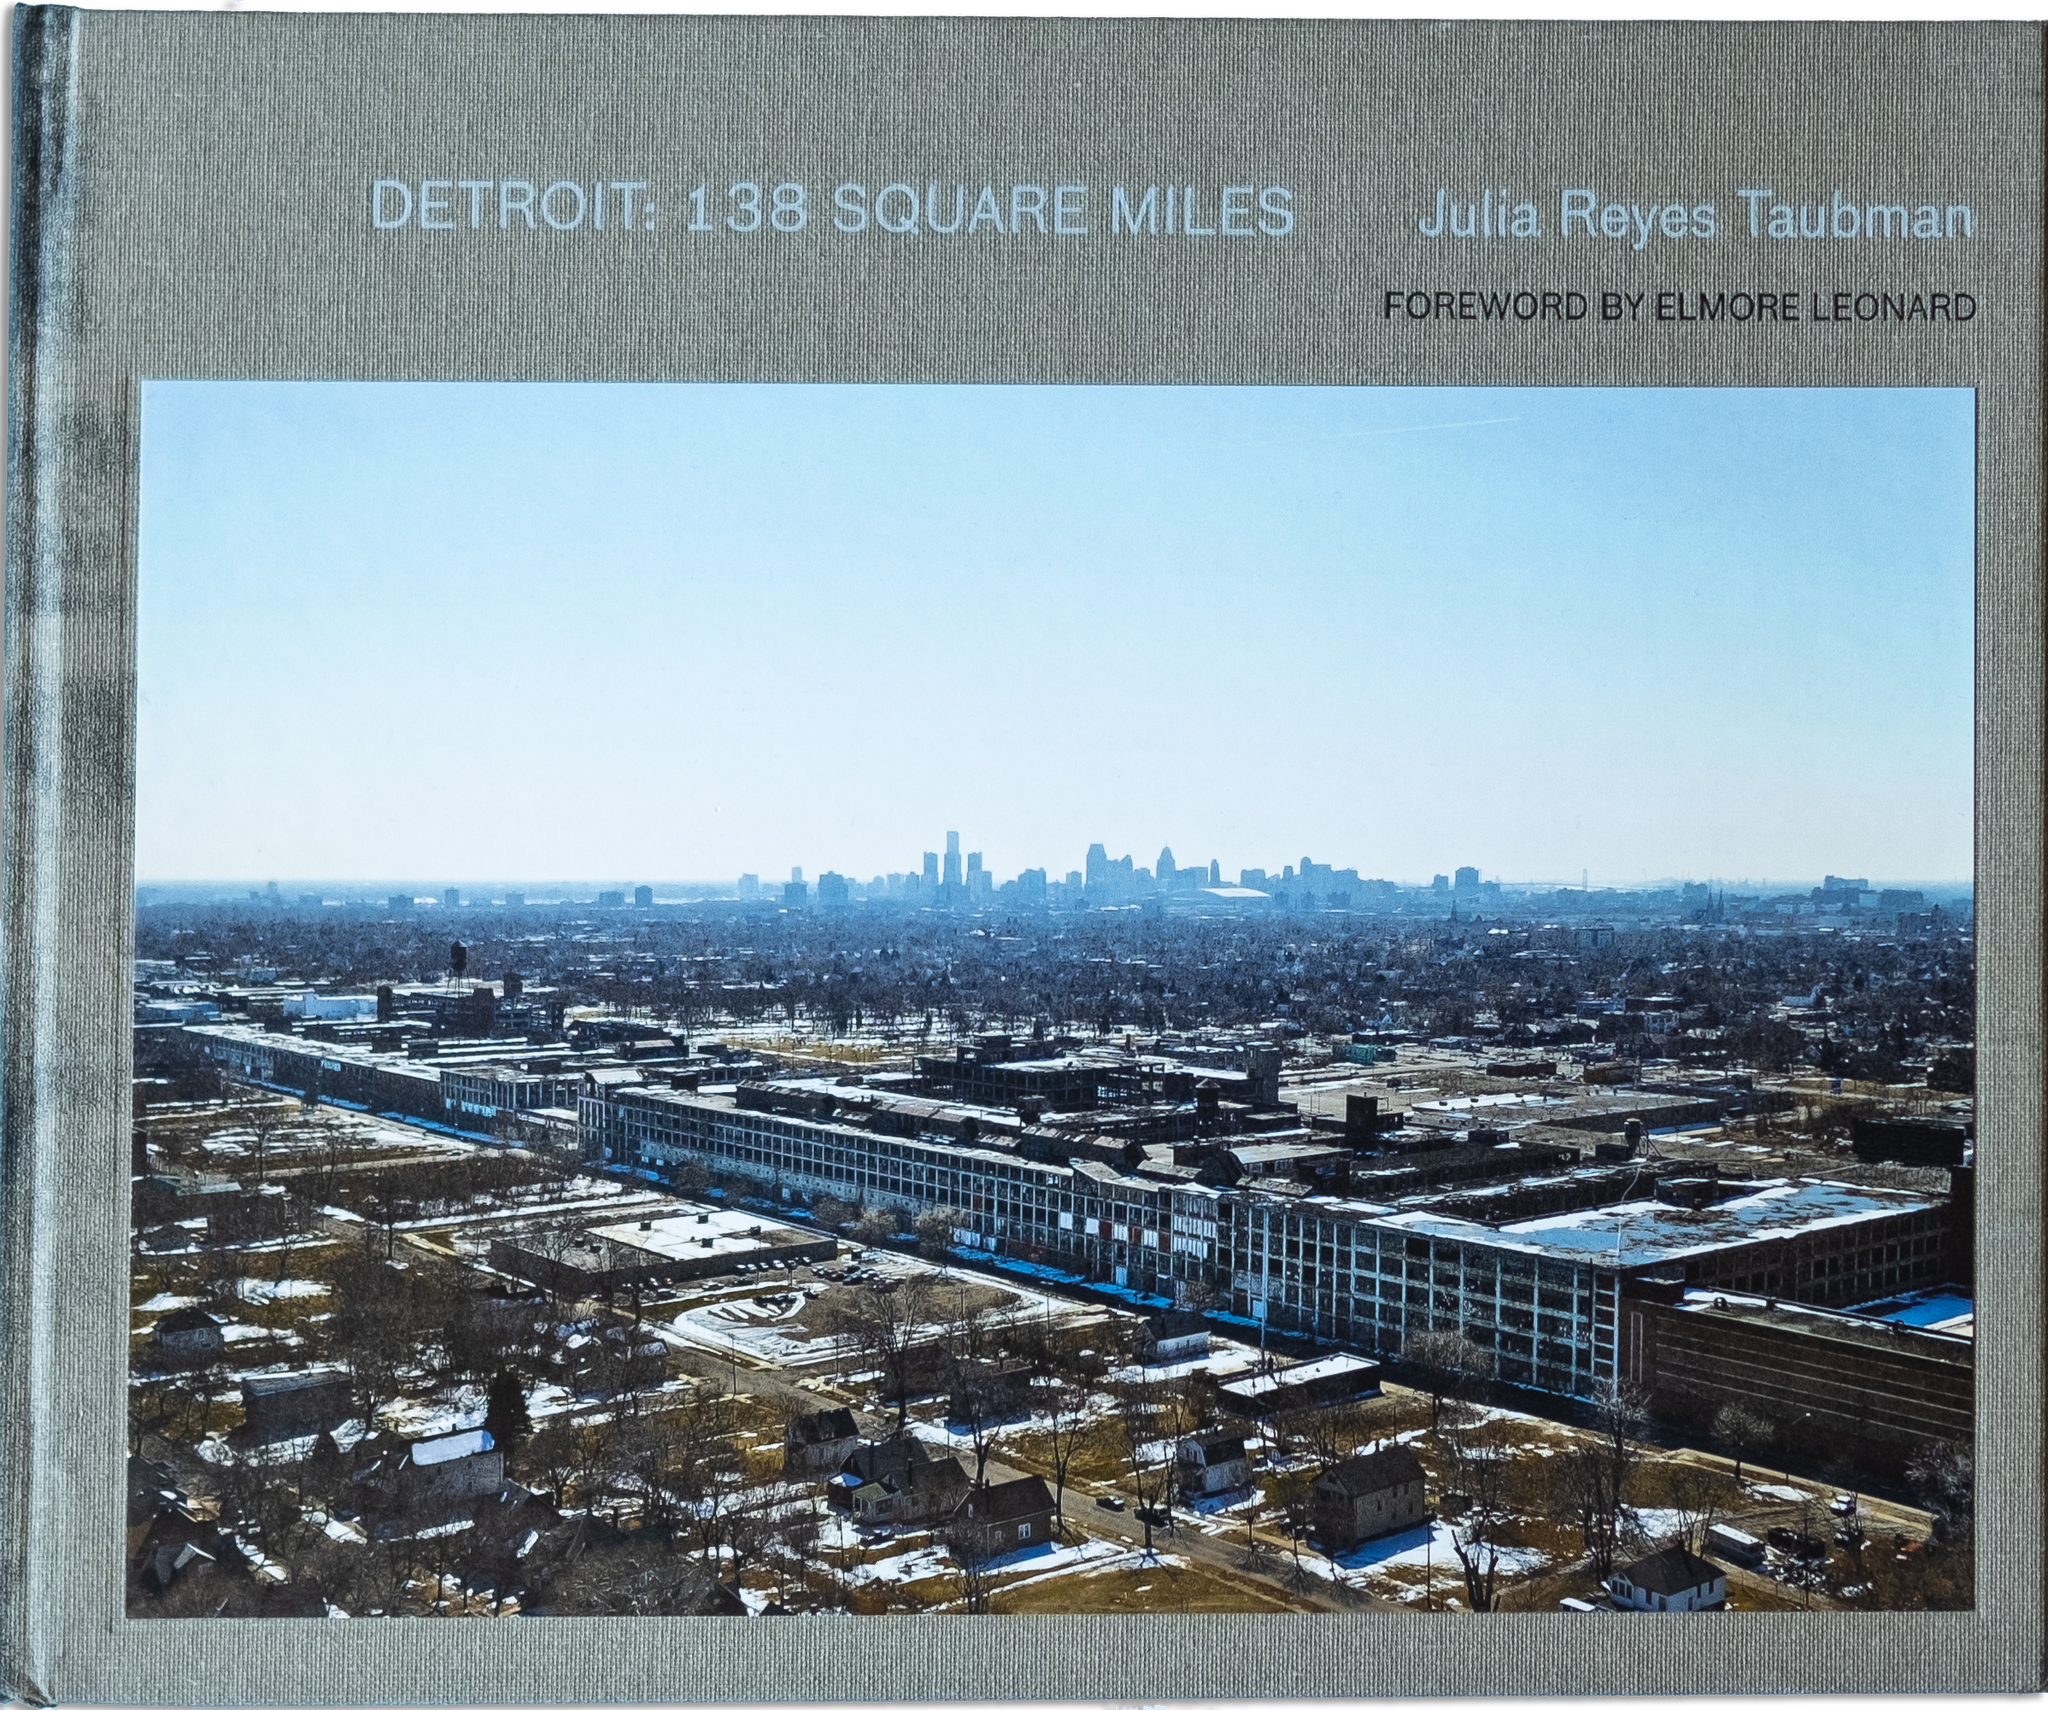 Detroit: 138 Square Miles